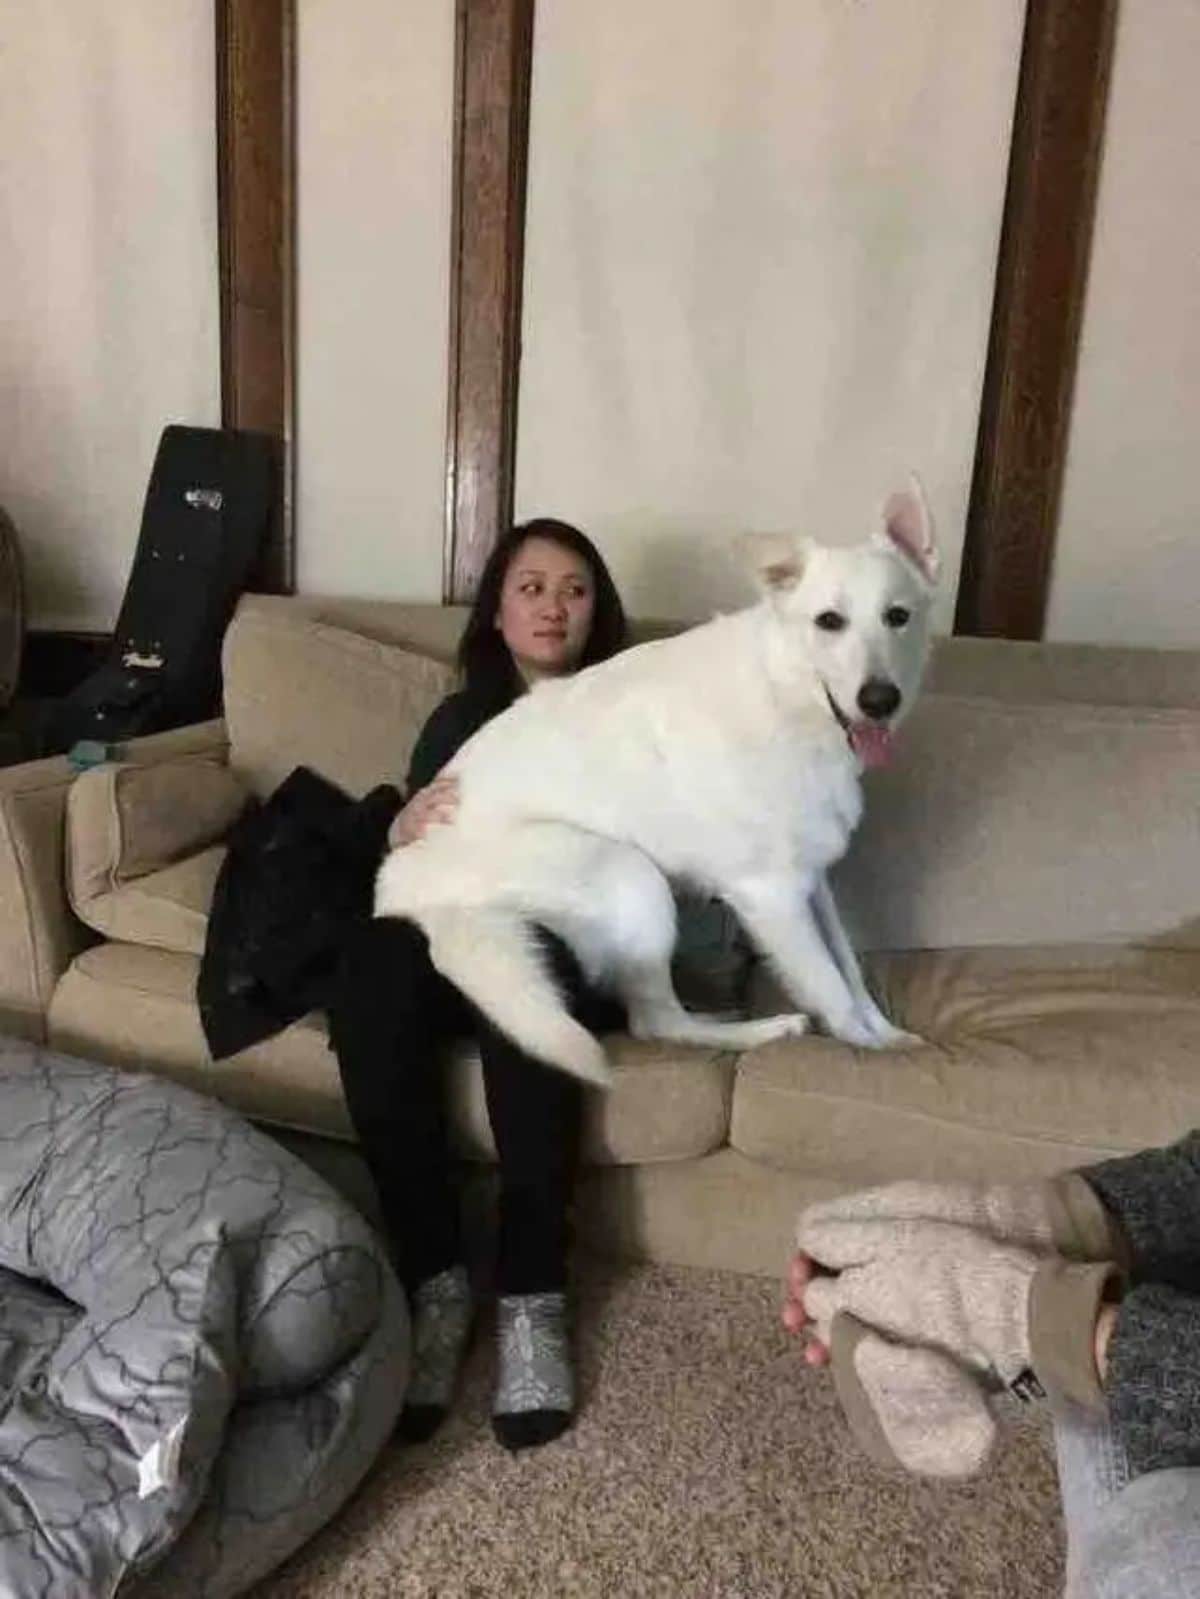 large white dog sitting on a woman's lap